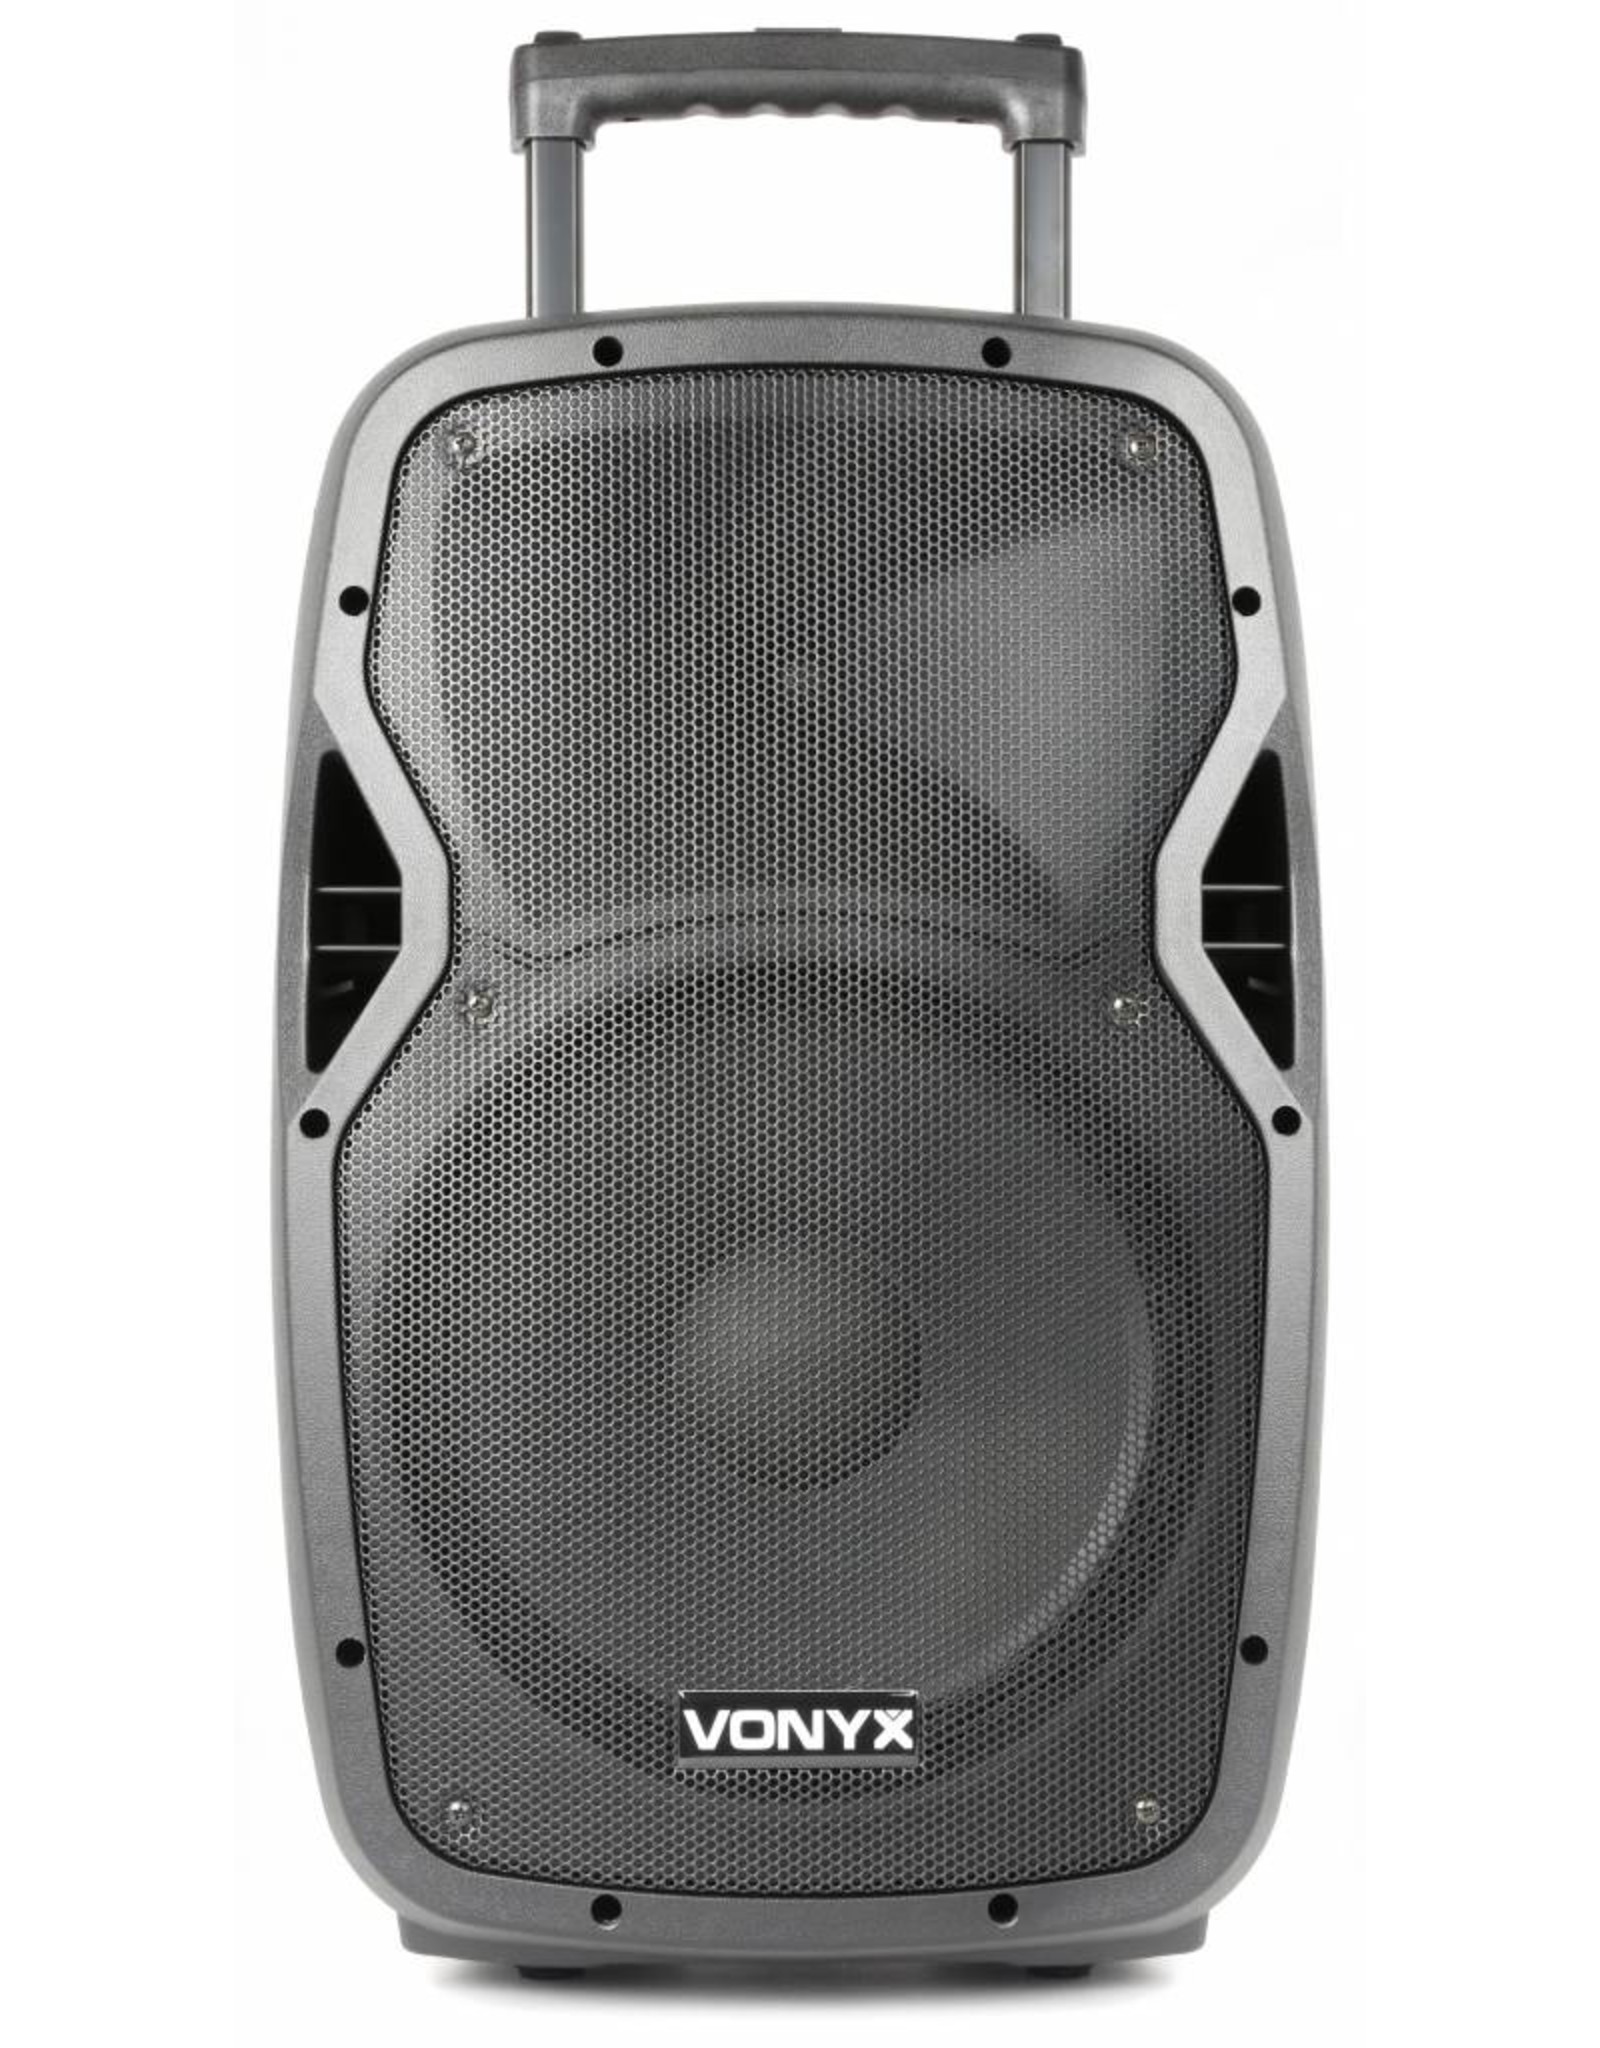 Vonyx AP1200PA Mobiele Speaker met Accu 12" Bluetooth/USB/SD/Mp3/VHF 170.334